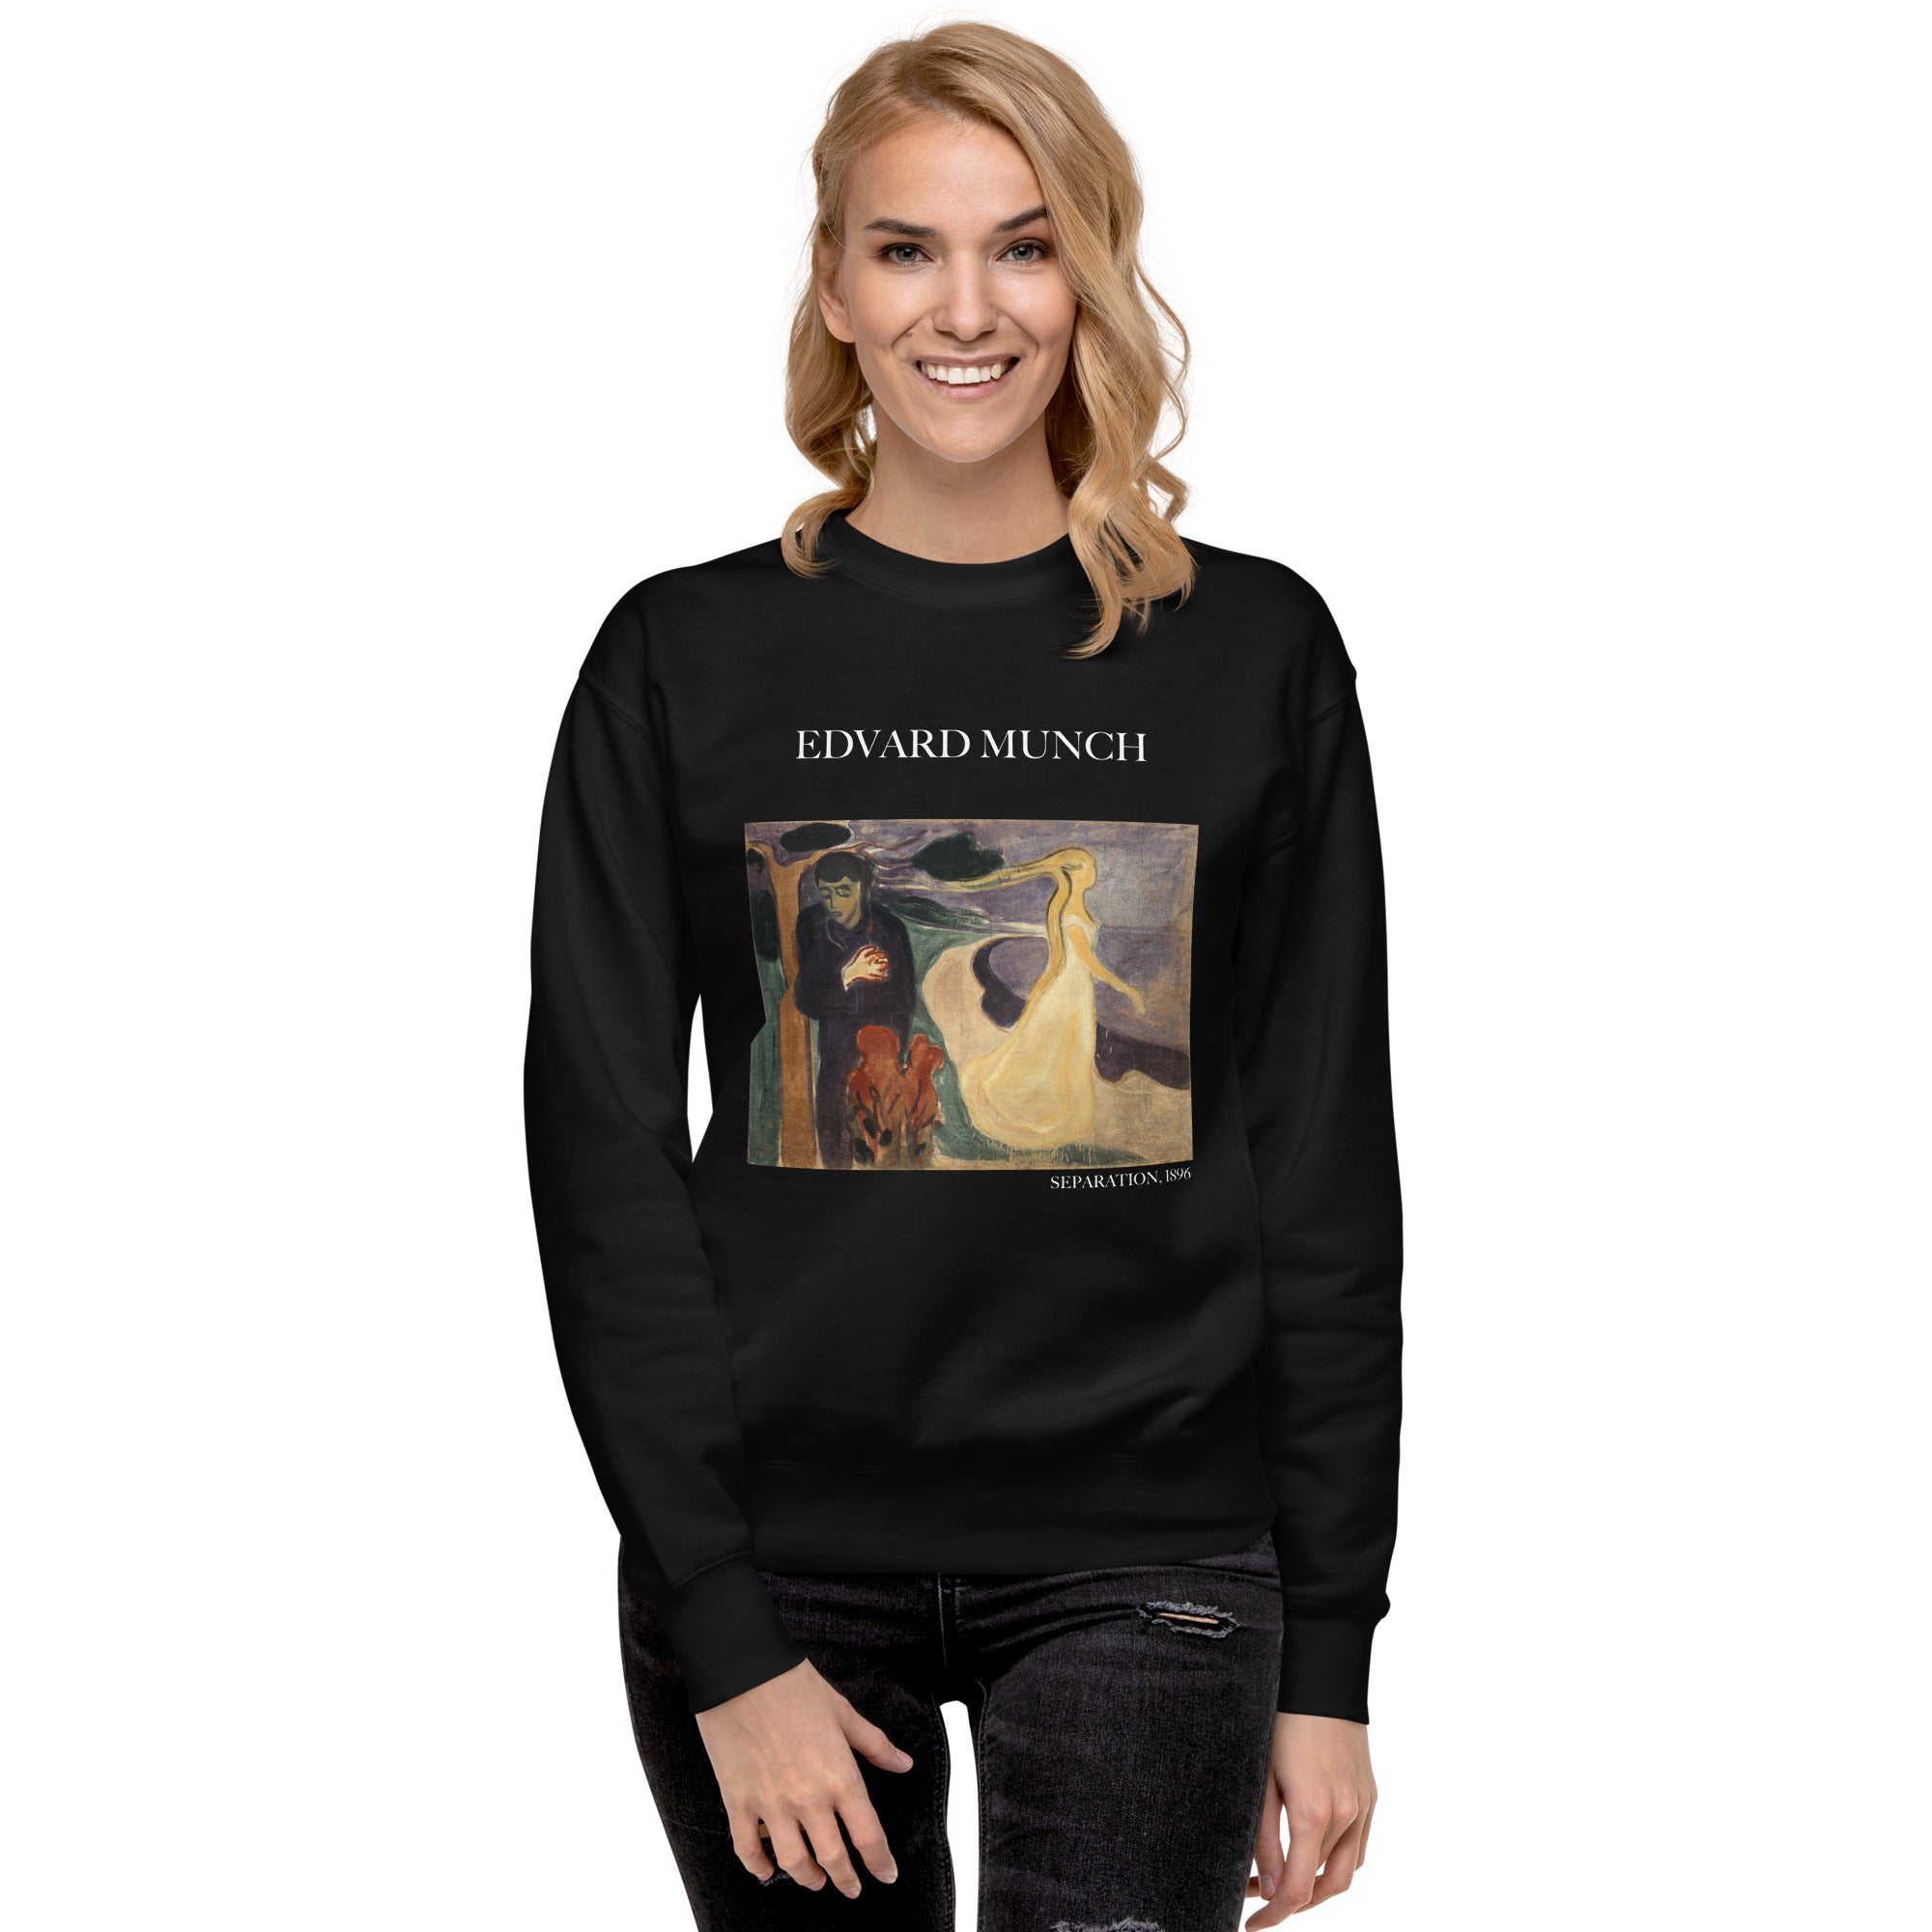 Edvard Munch 'Separation' Famous Painting Sweatshirt | Unisex Premium Sweatshirt